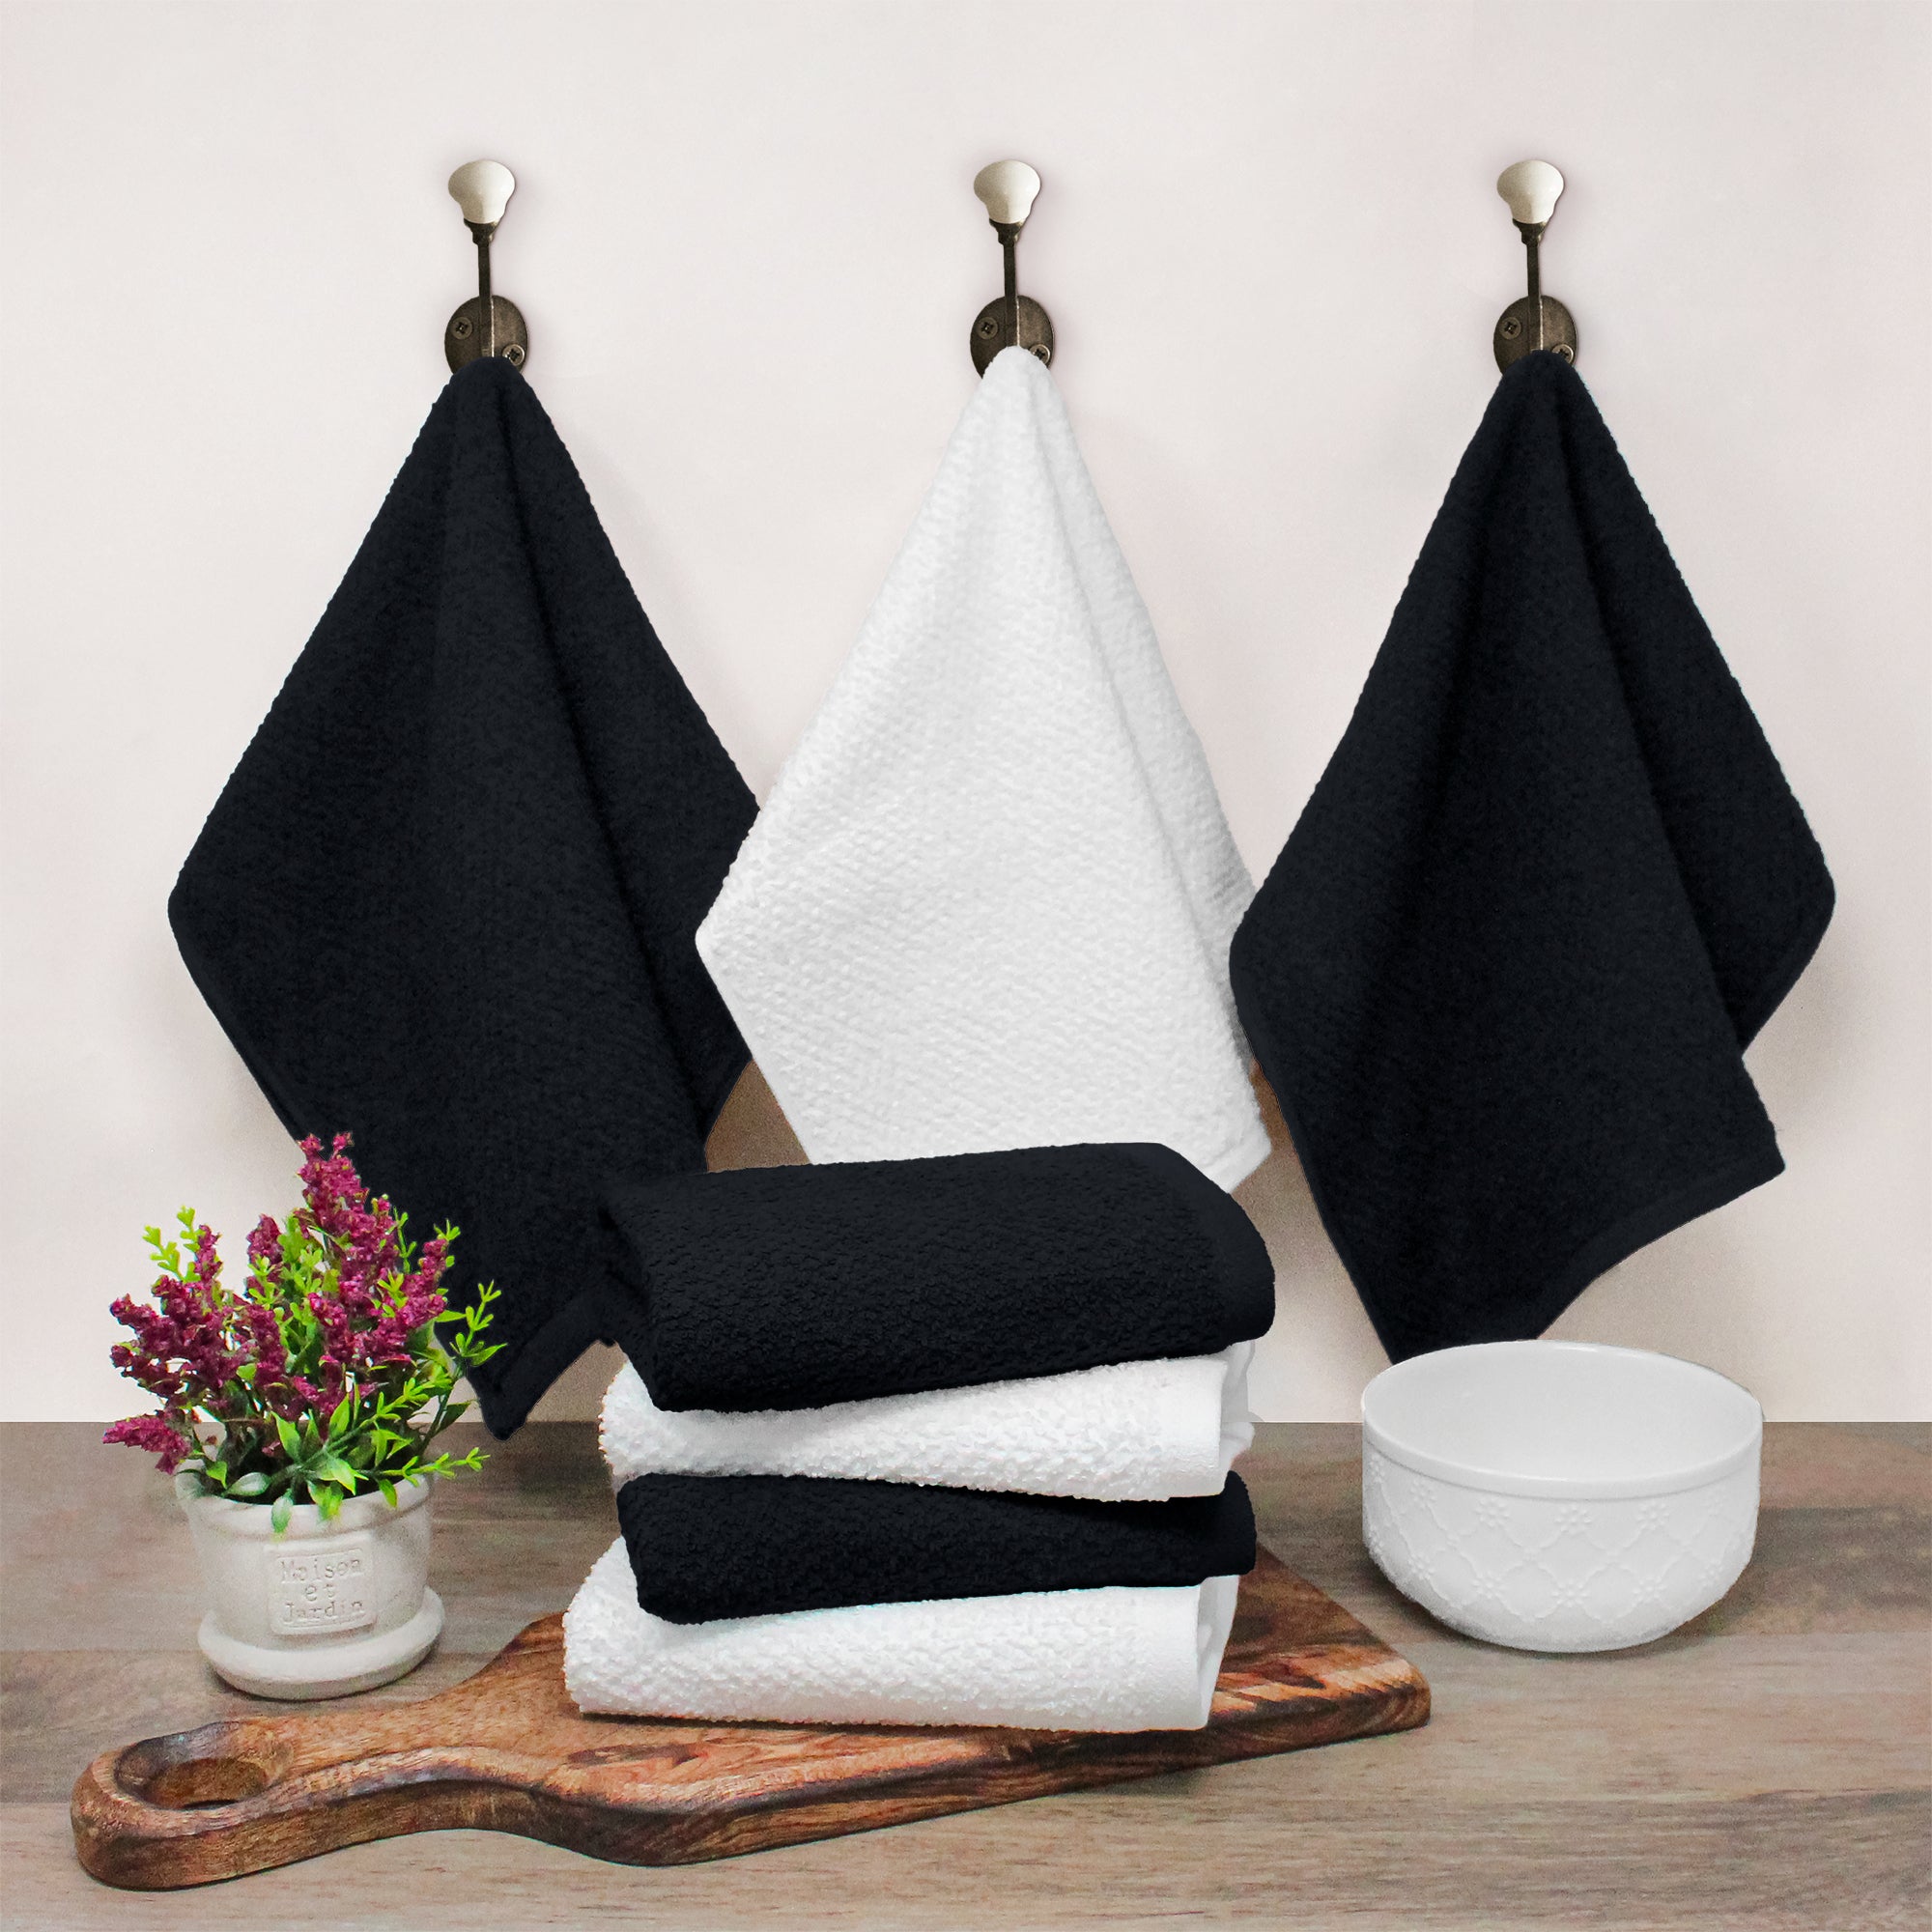 12 Pack 16”x28” Bleach Proof Hand Towel 3 lb Burgundy – Towels N More